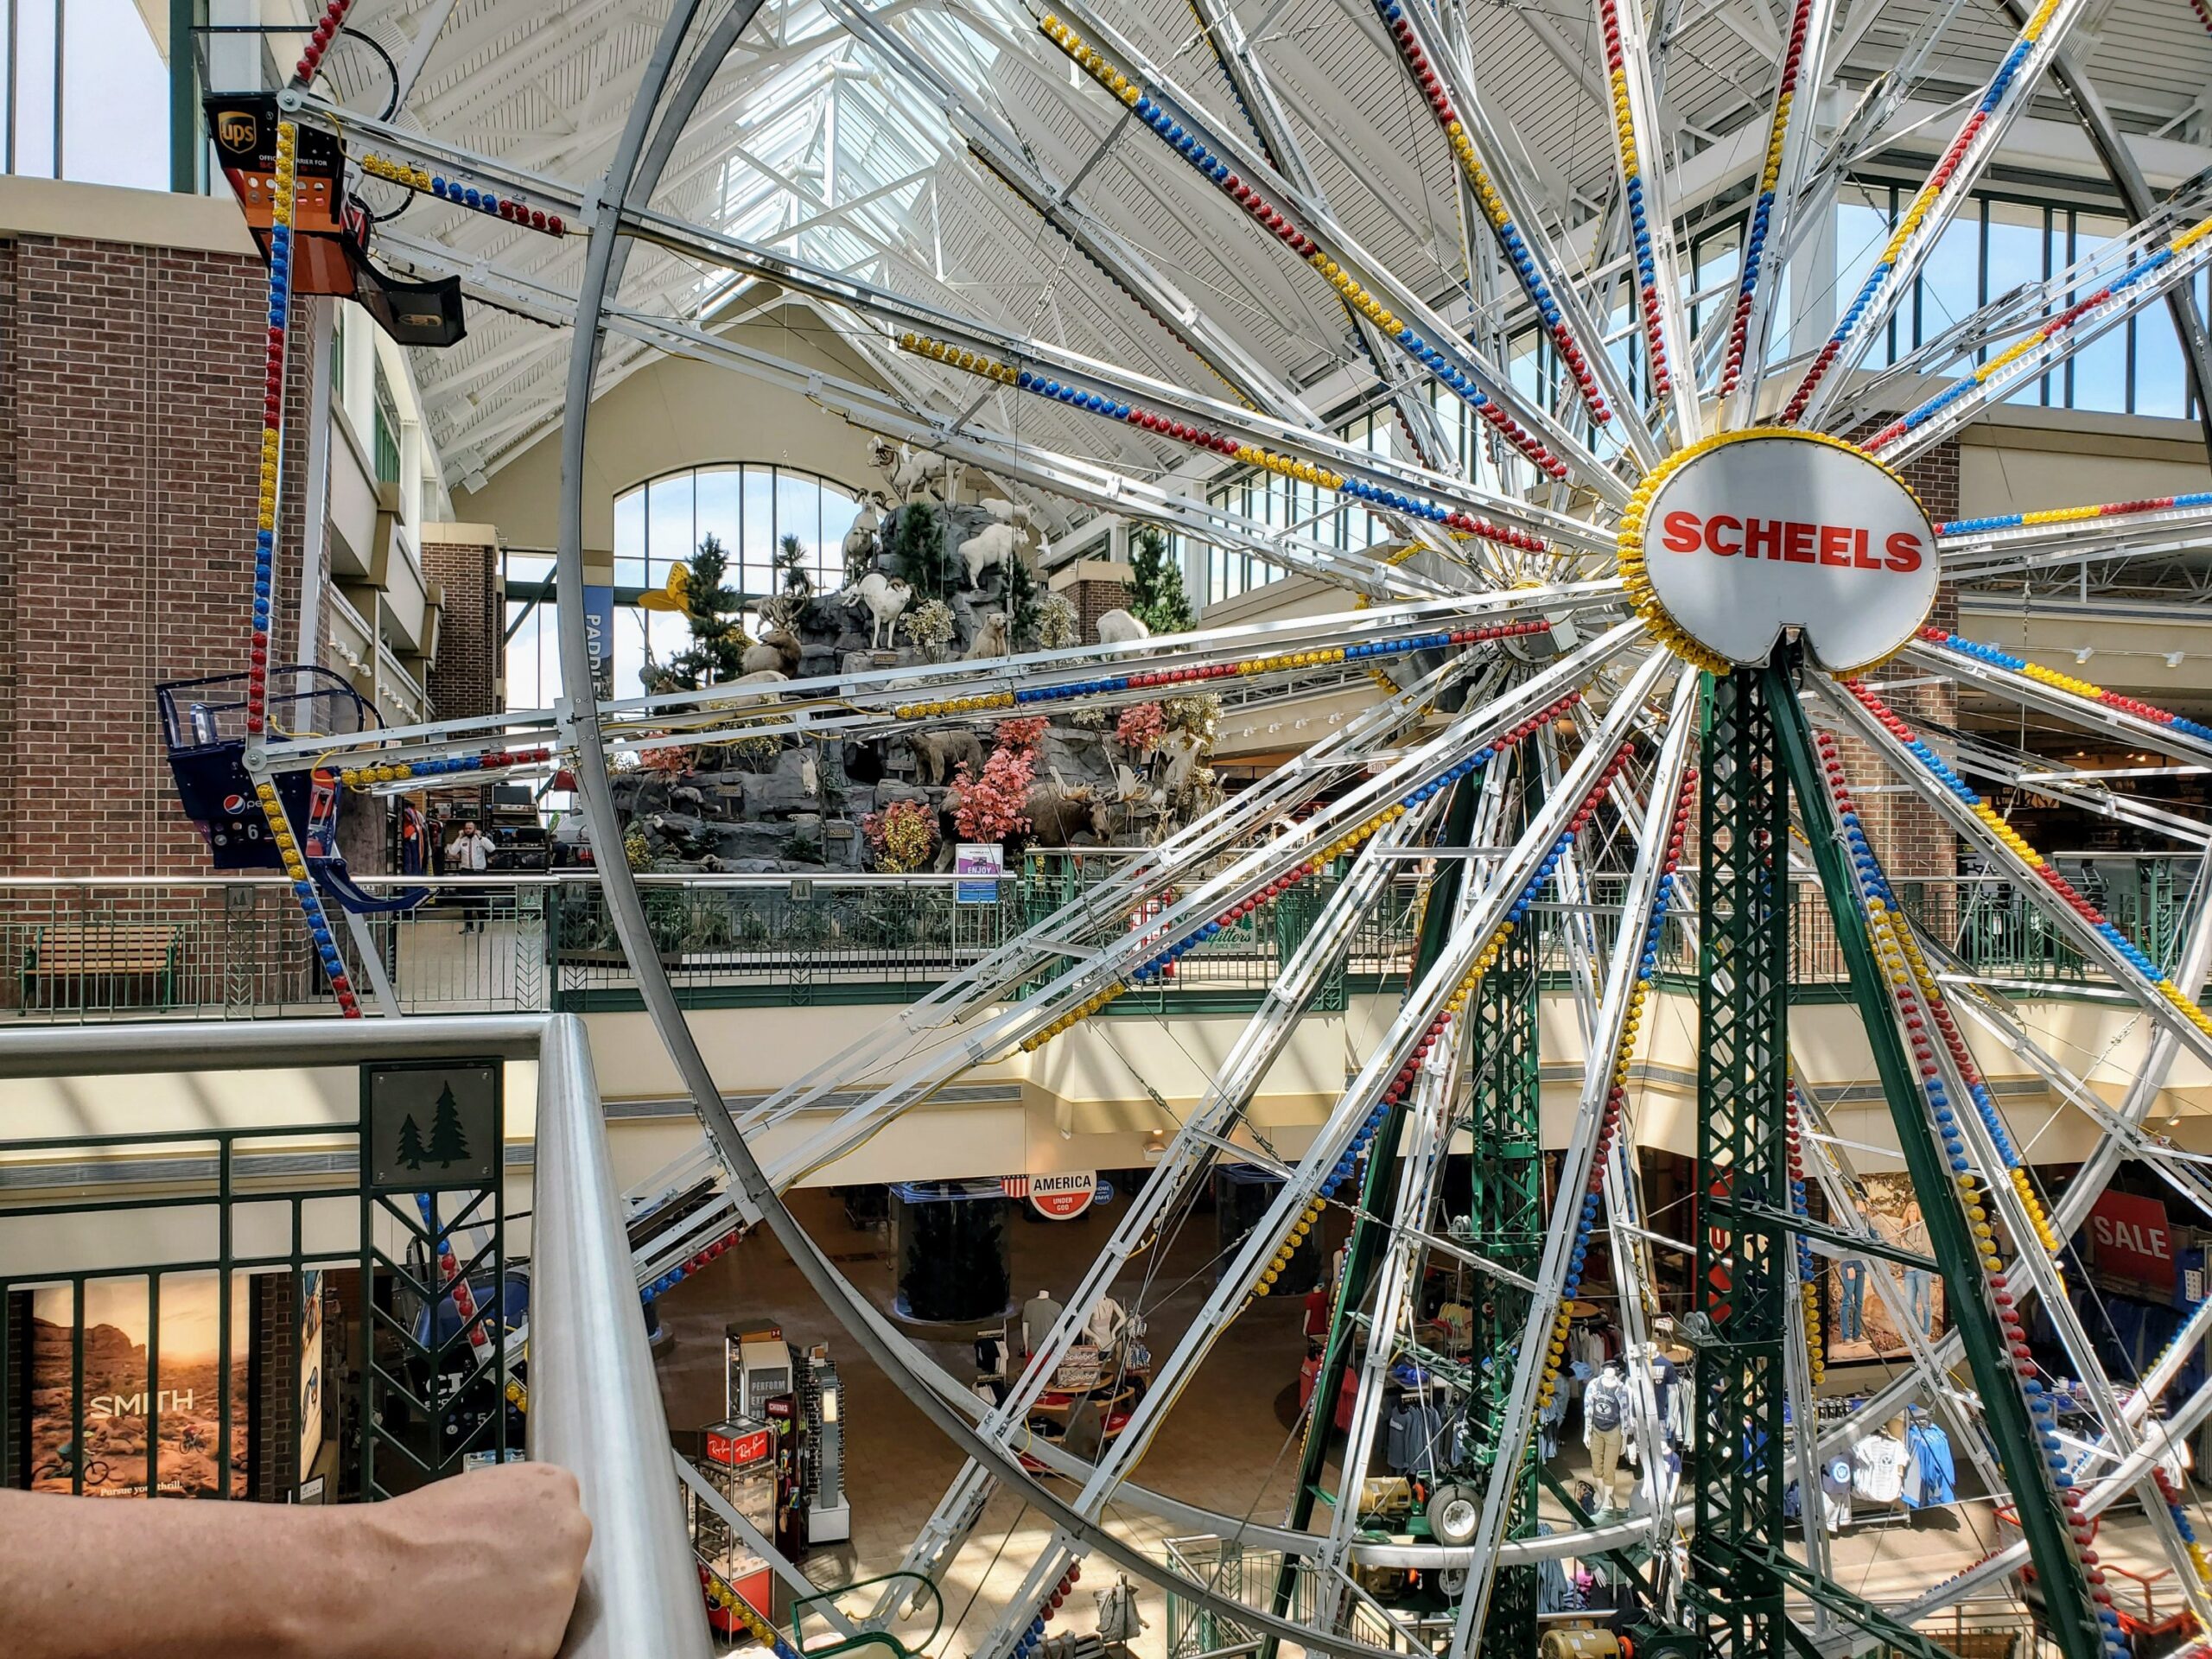 Ferris Wheel in Scheels, Draper, UT